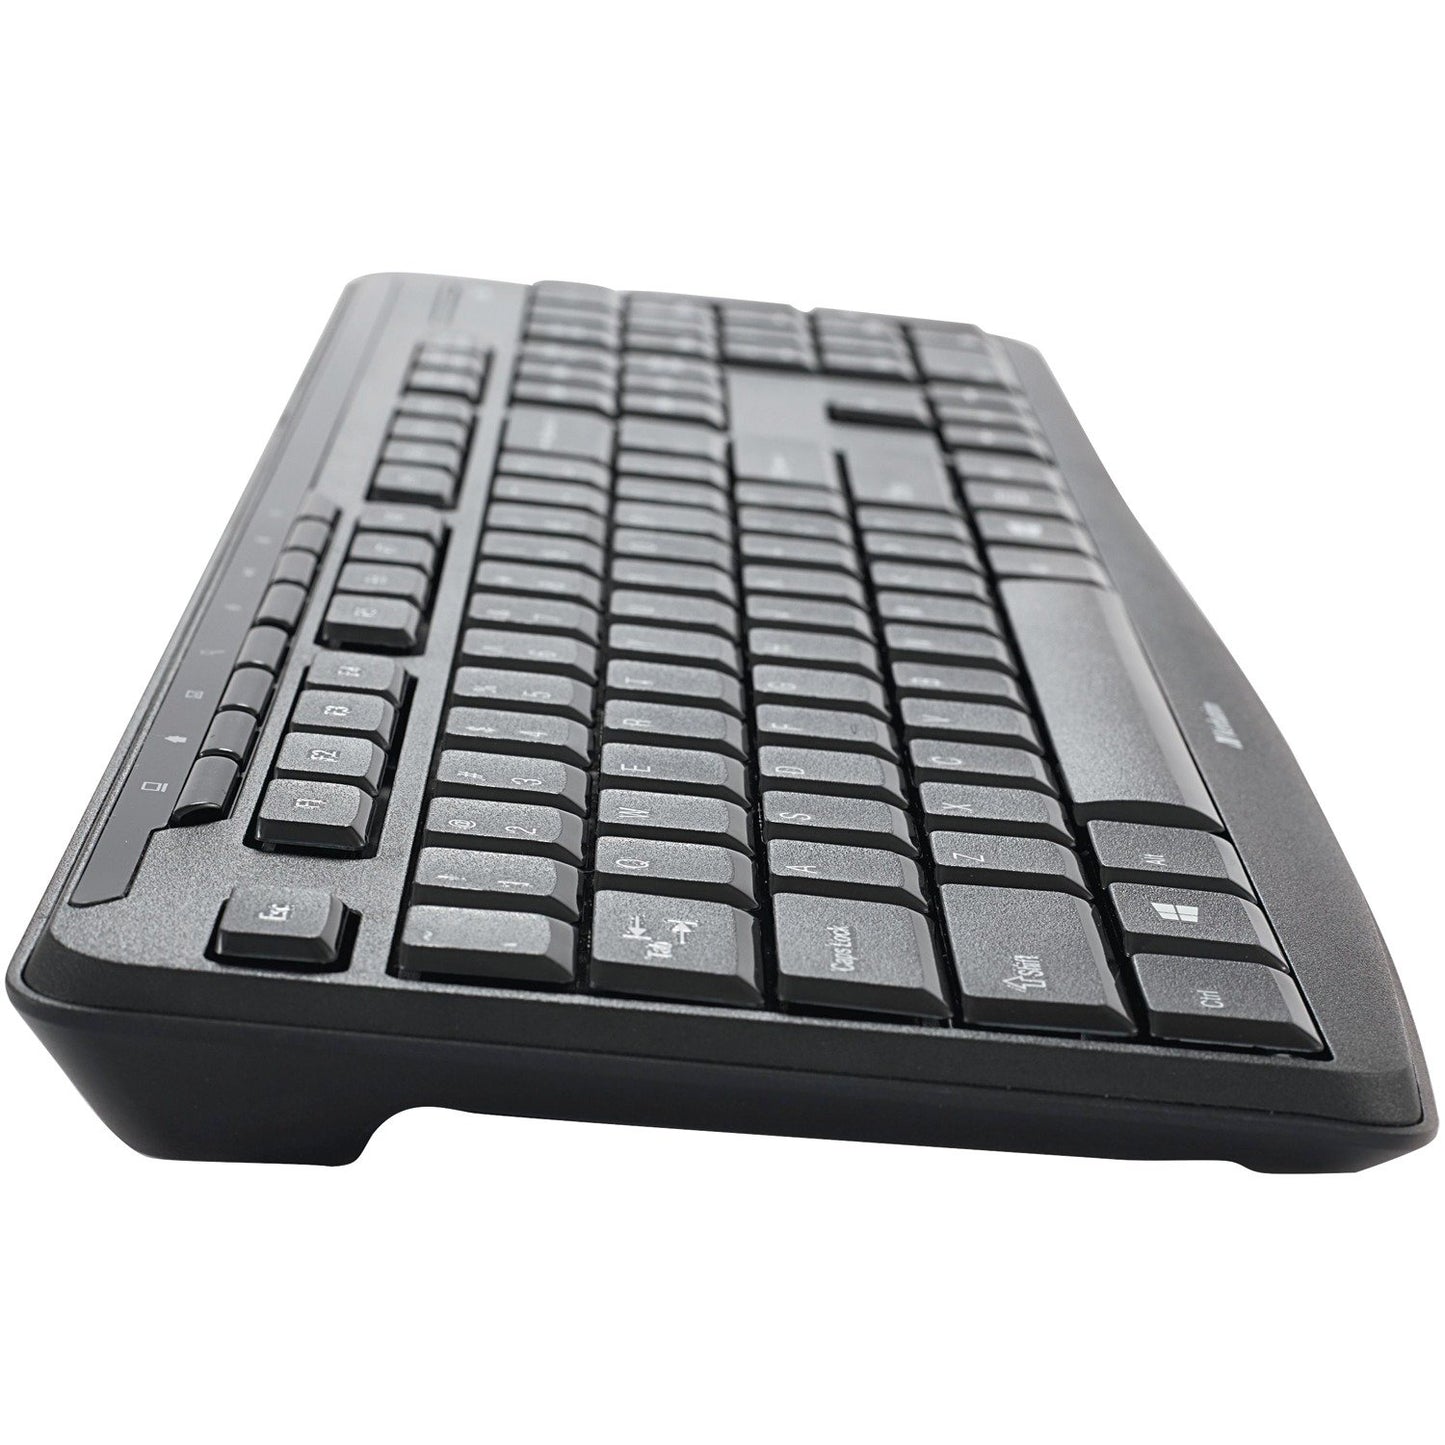 VERBATIM 99779 Silent Wireless Mouse & Keyboard